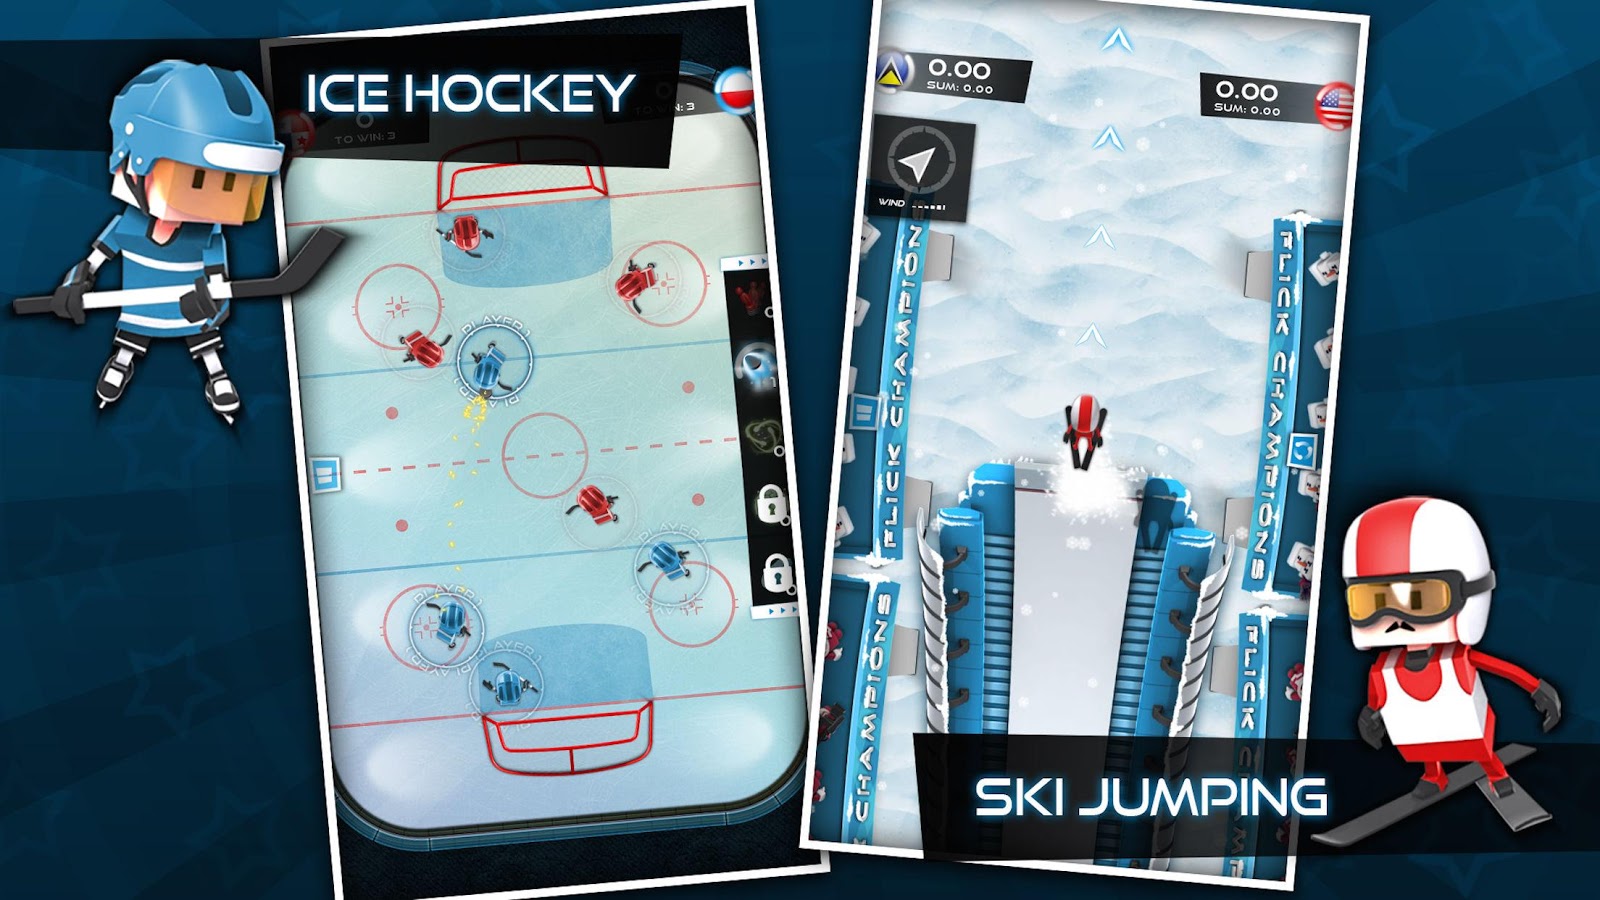 Flick Champions Winter Sports (Mod)